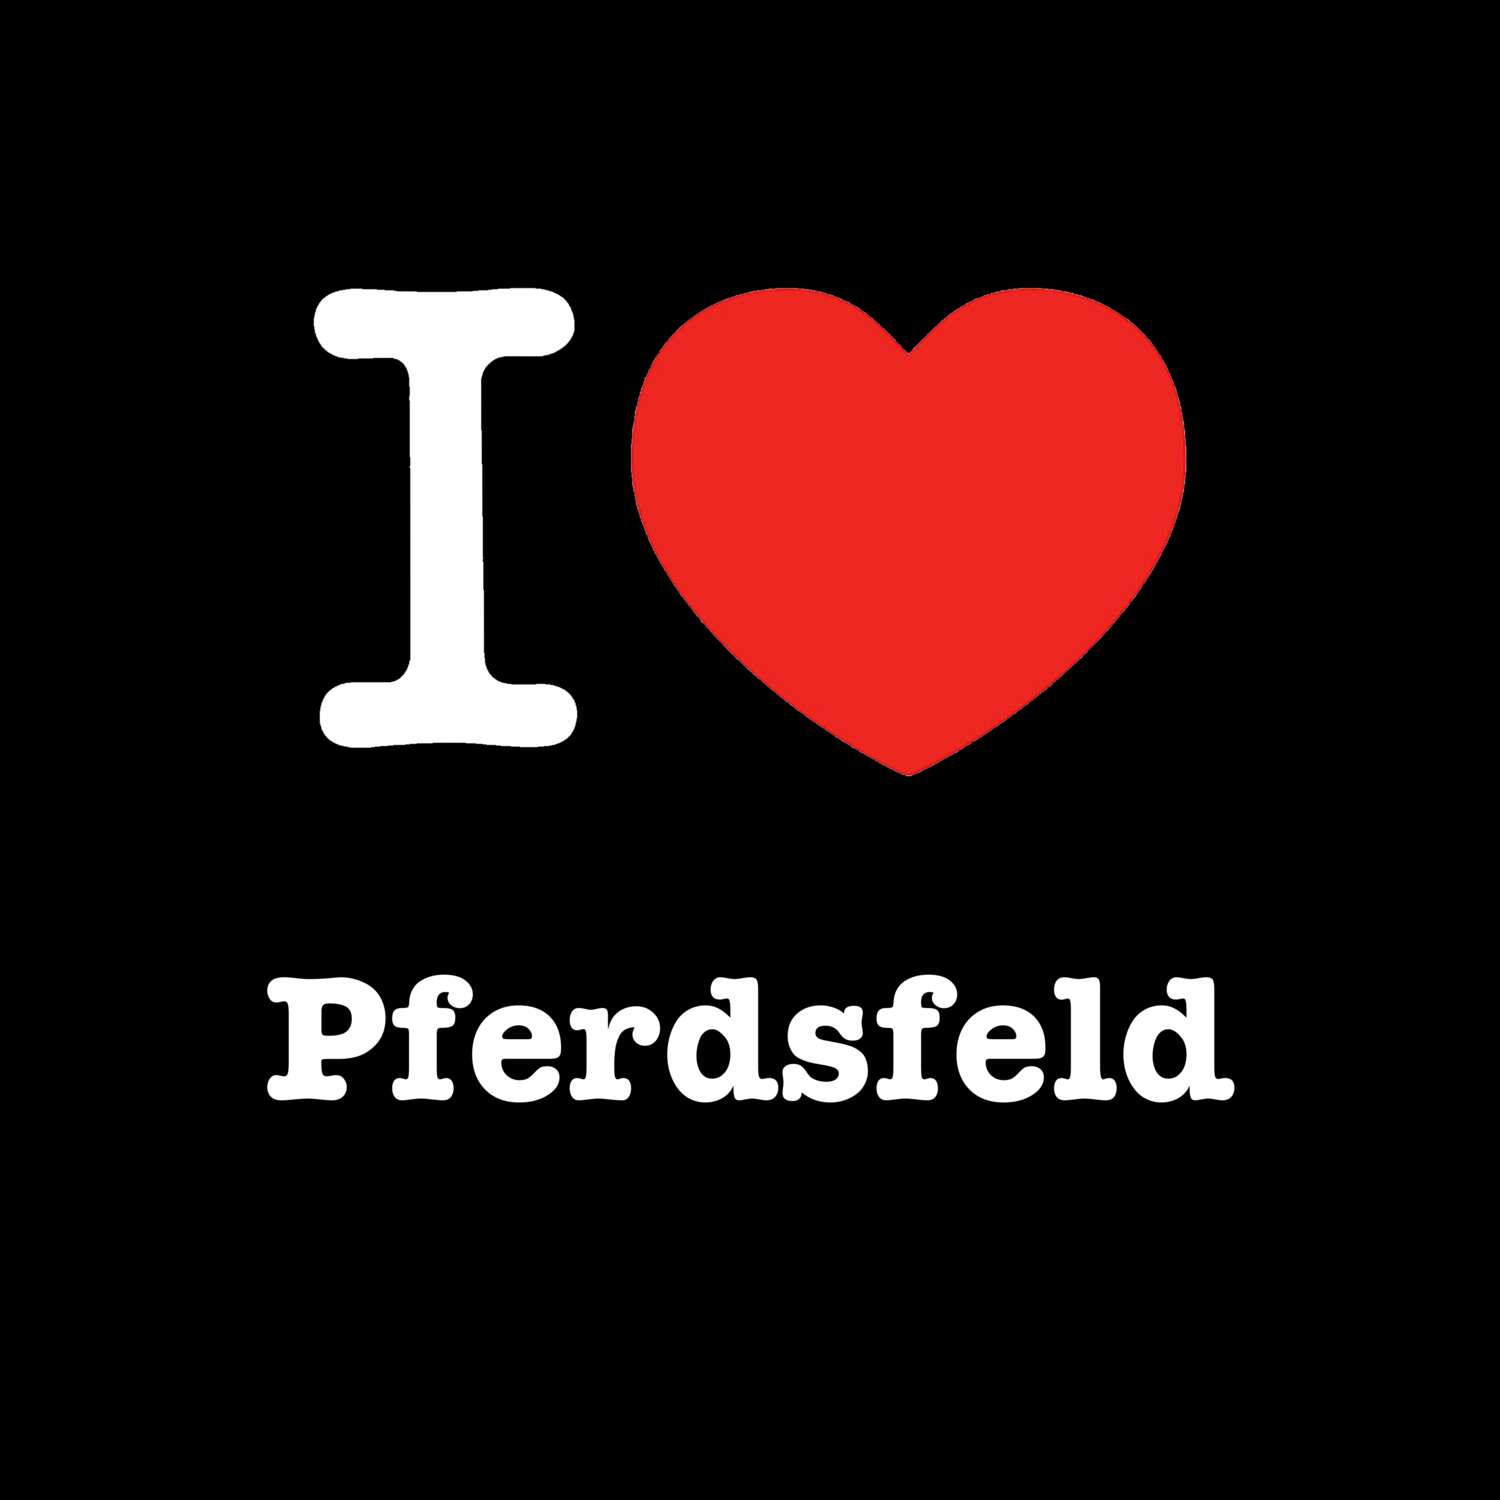 Pferdsfeld T-Shirt »I love«